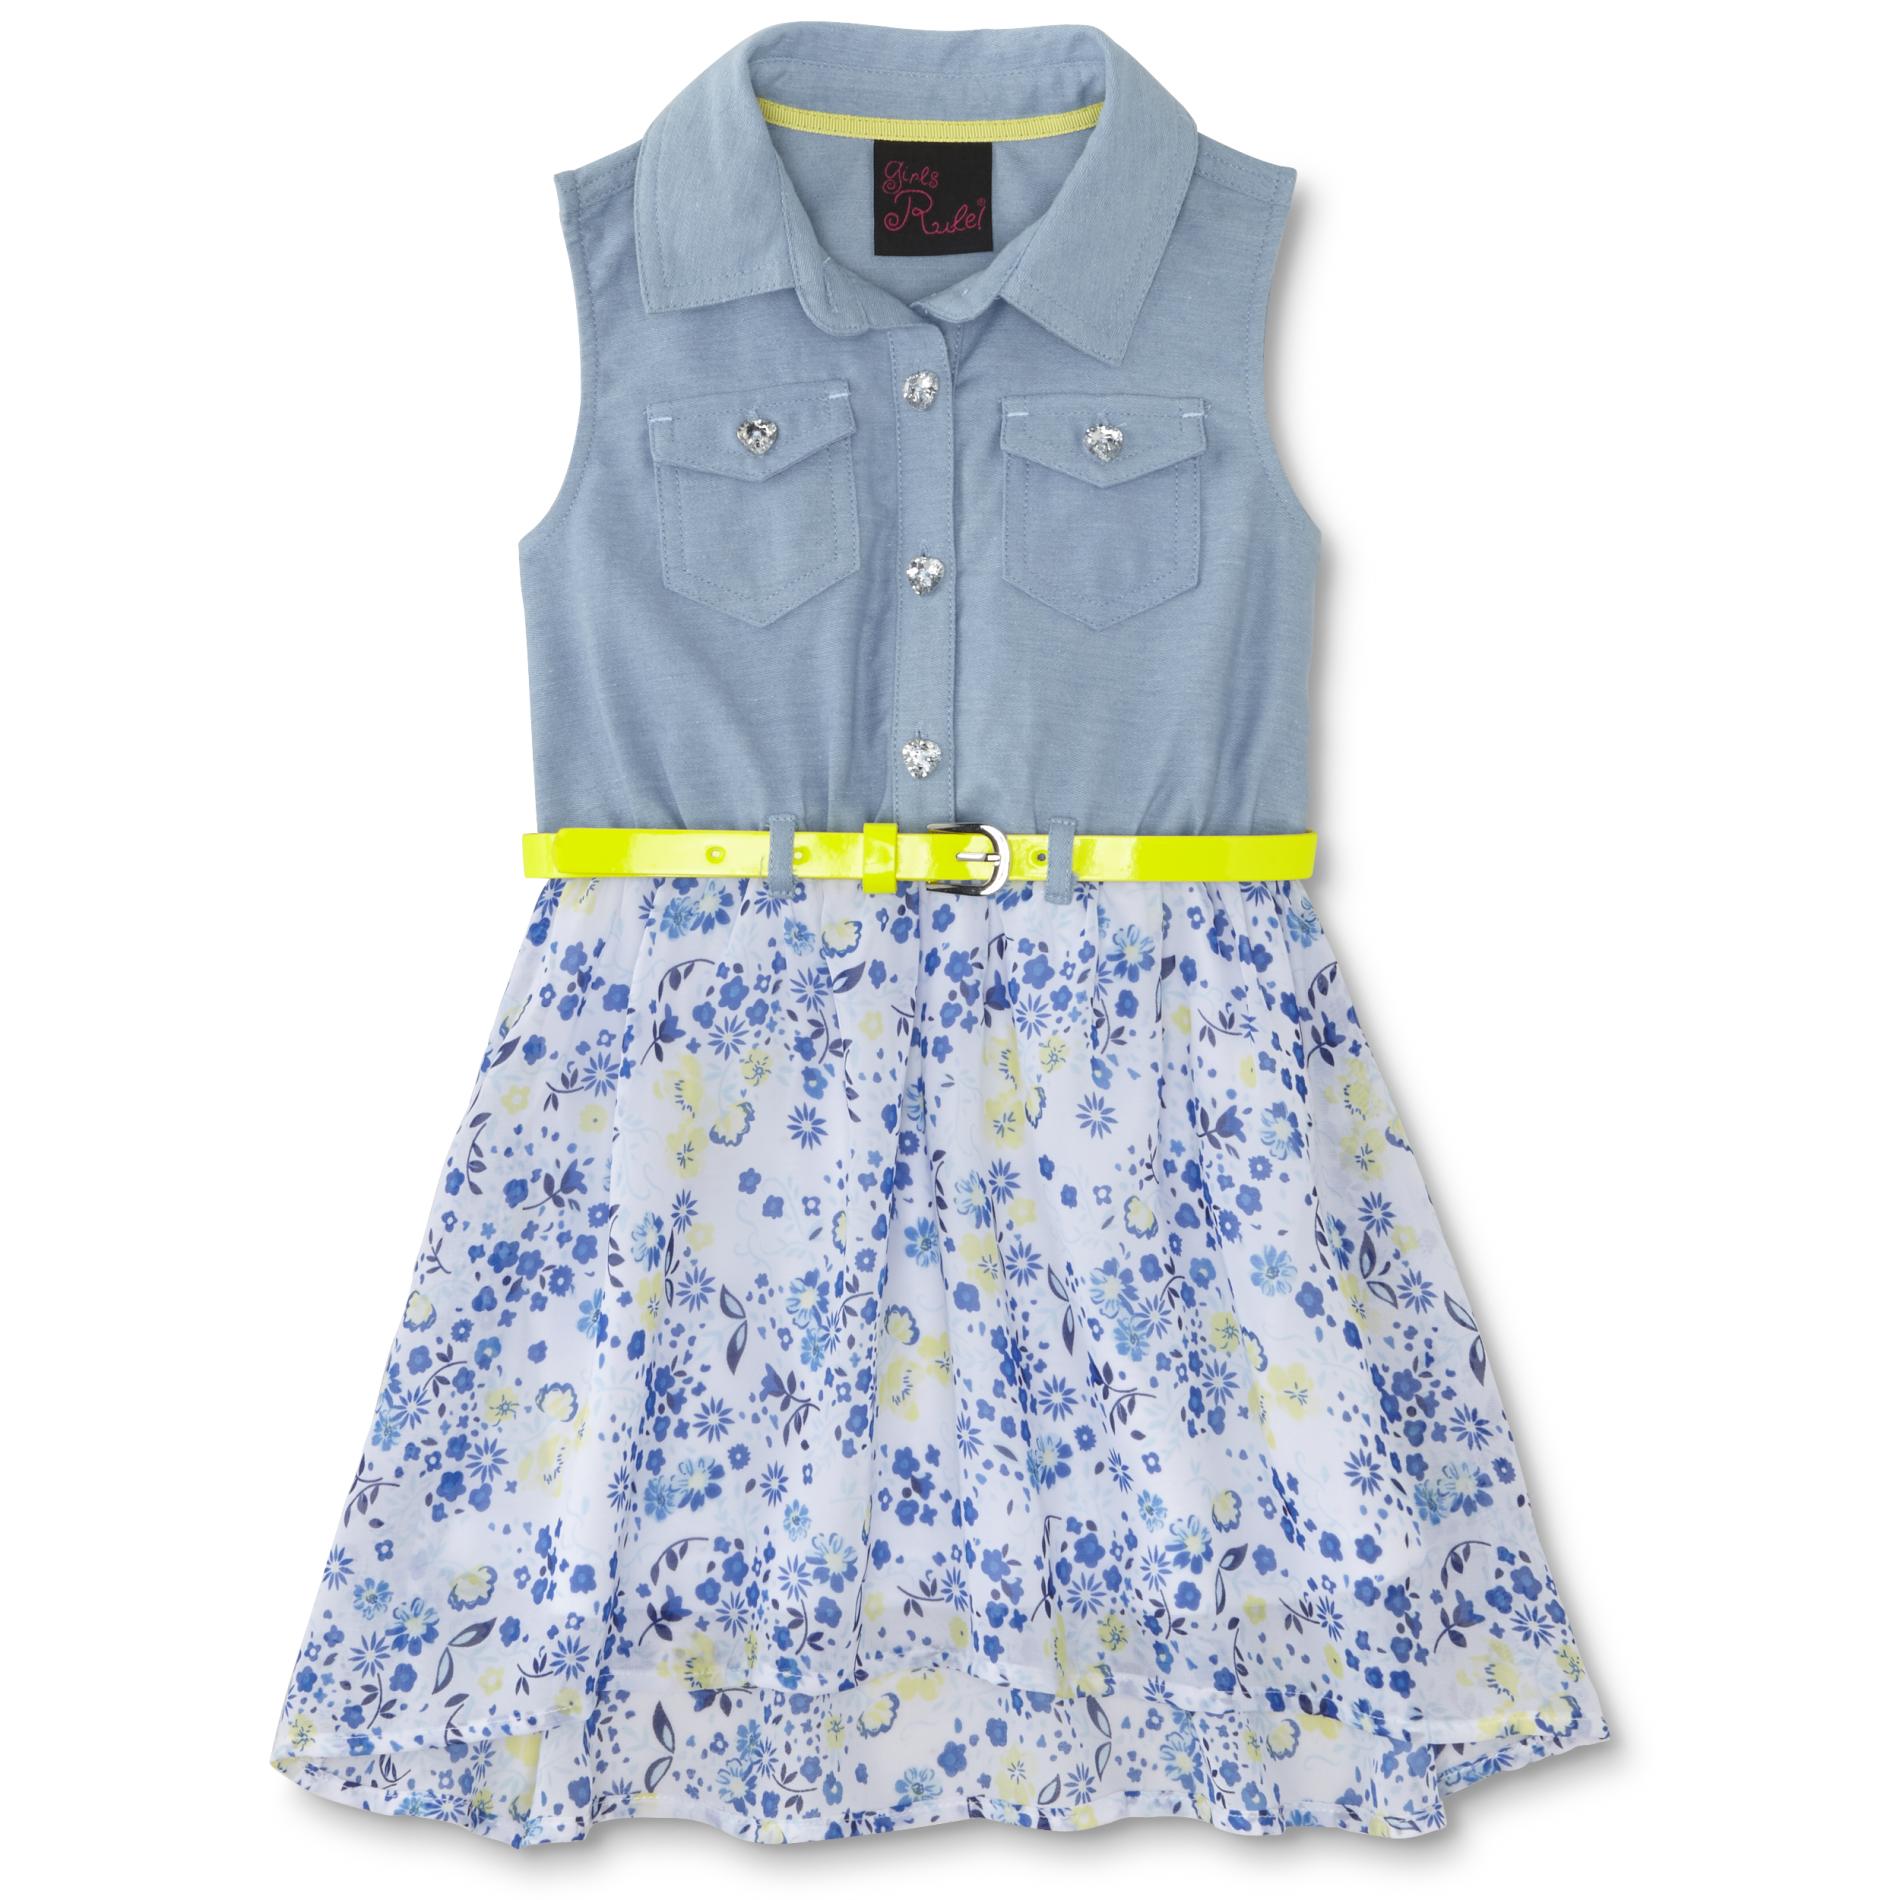 Girls Rule Infant & Toddler Girl's Belted Shirtdress - Floral